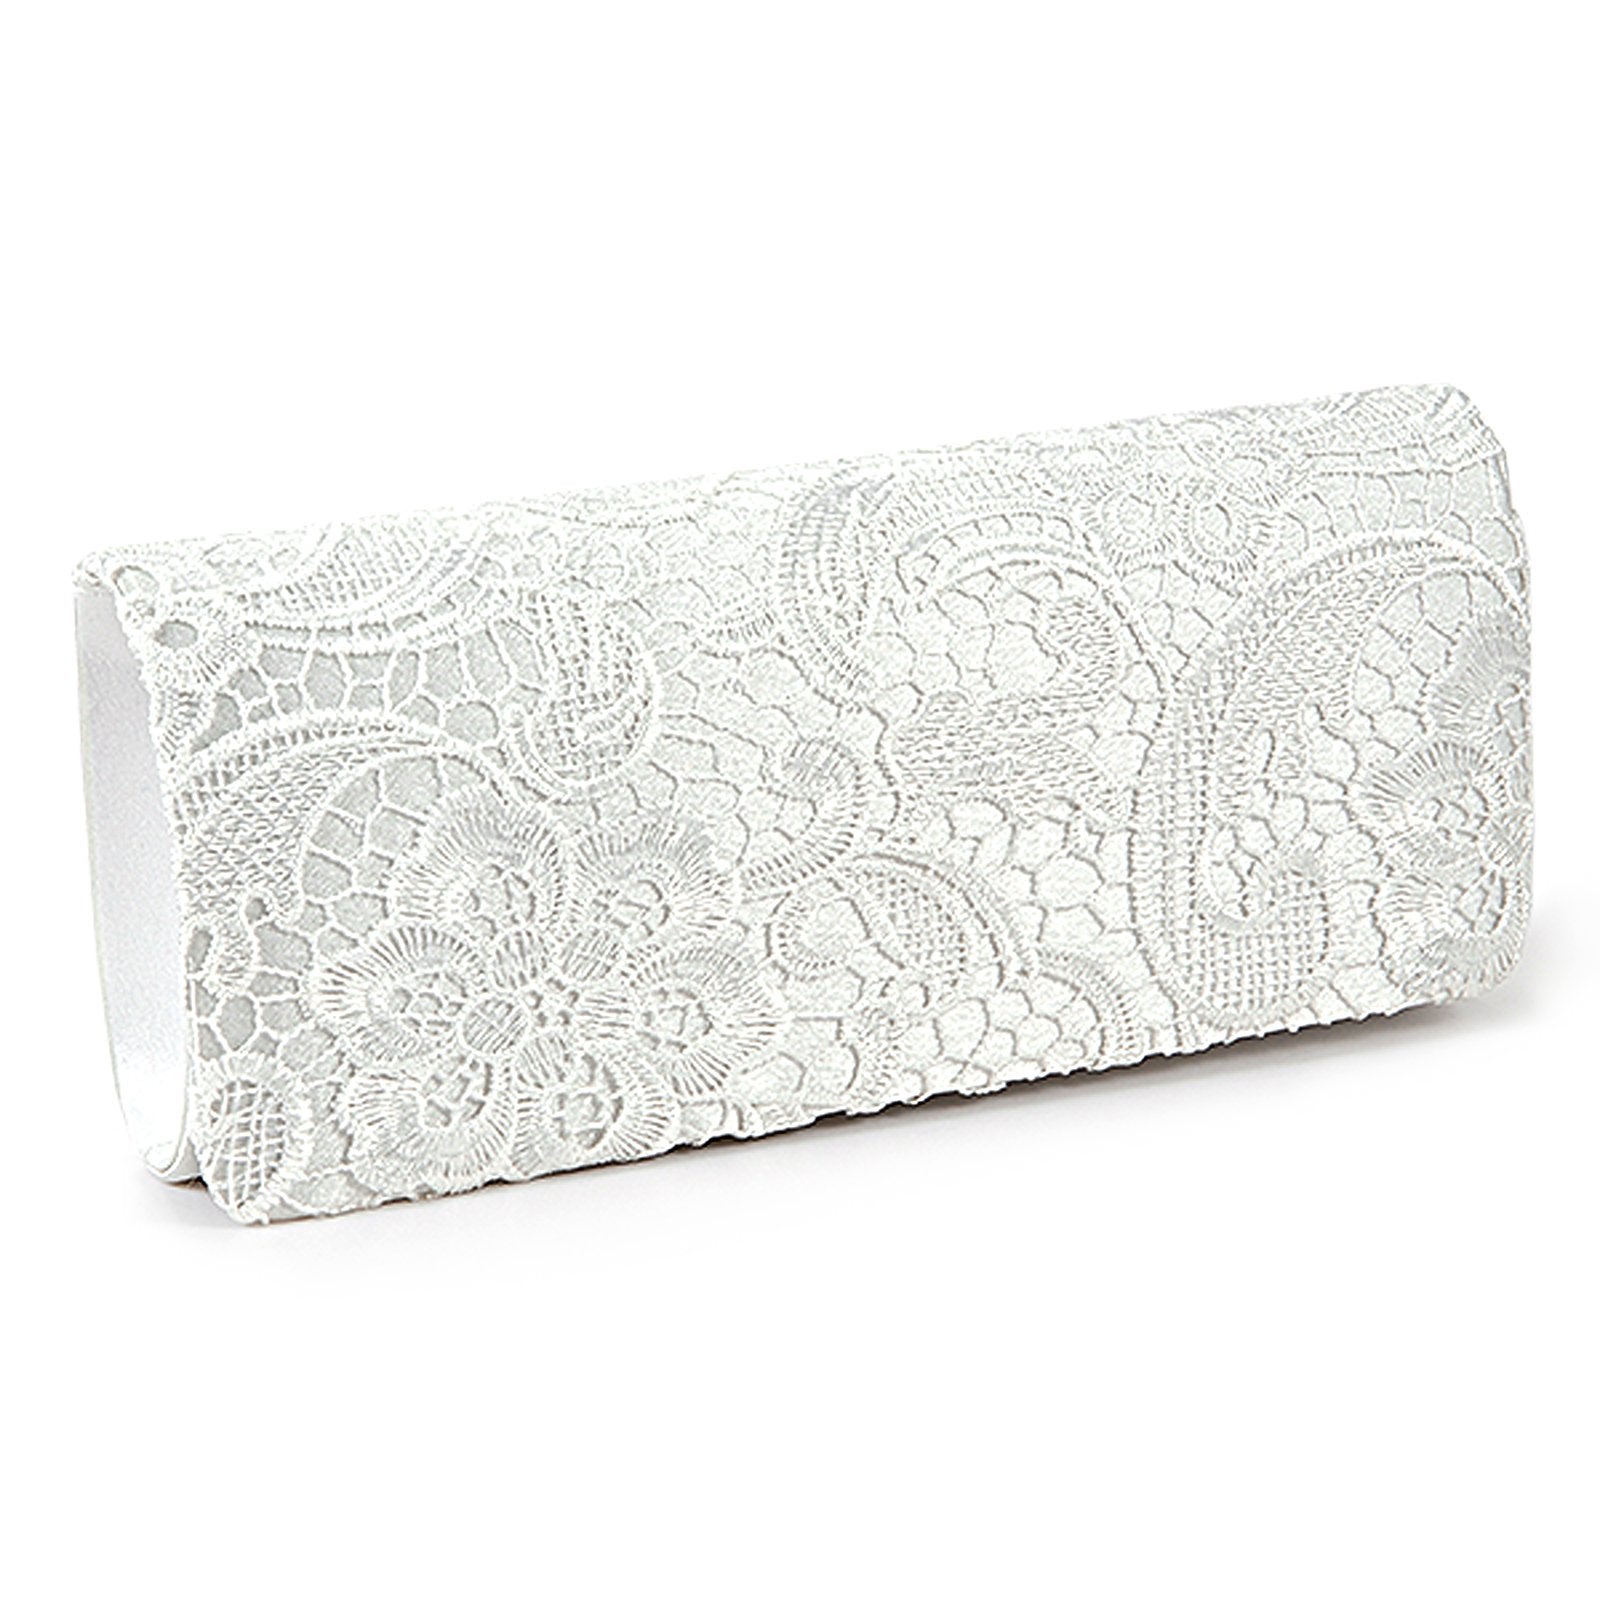 bag Shoulder wallet pouch Lace Floral Style Satchel clutch Fashion for Women Girl White - ebowsos